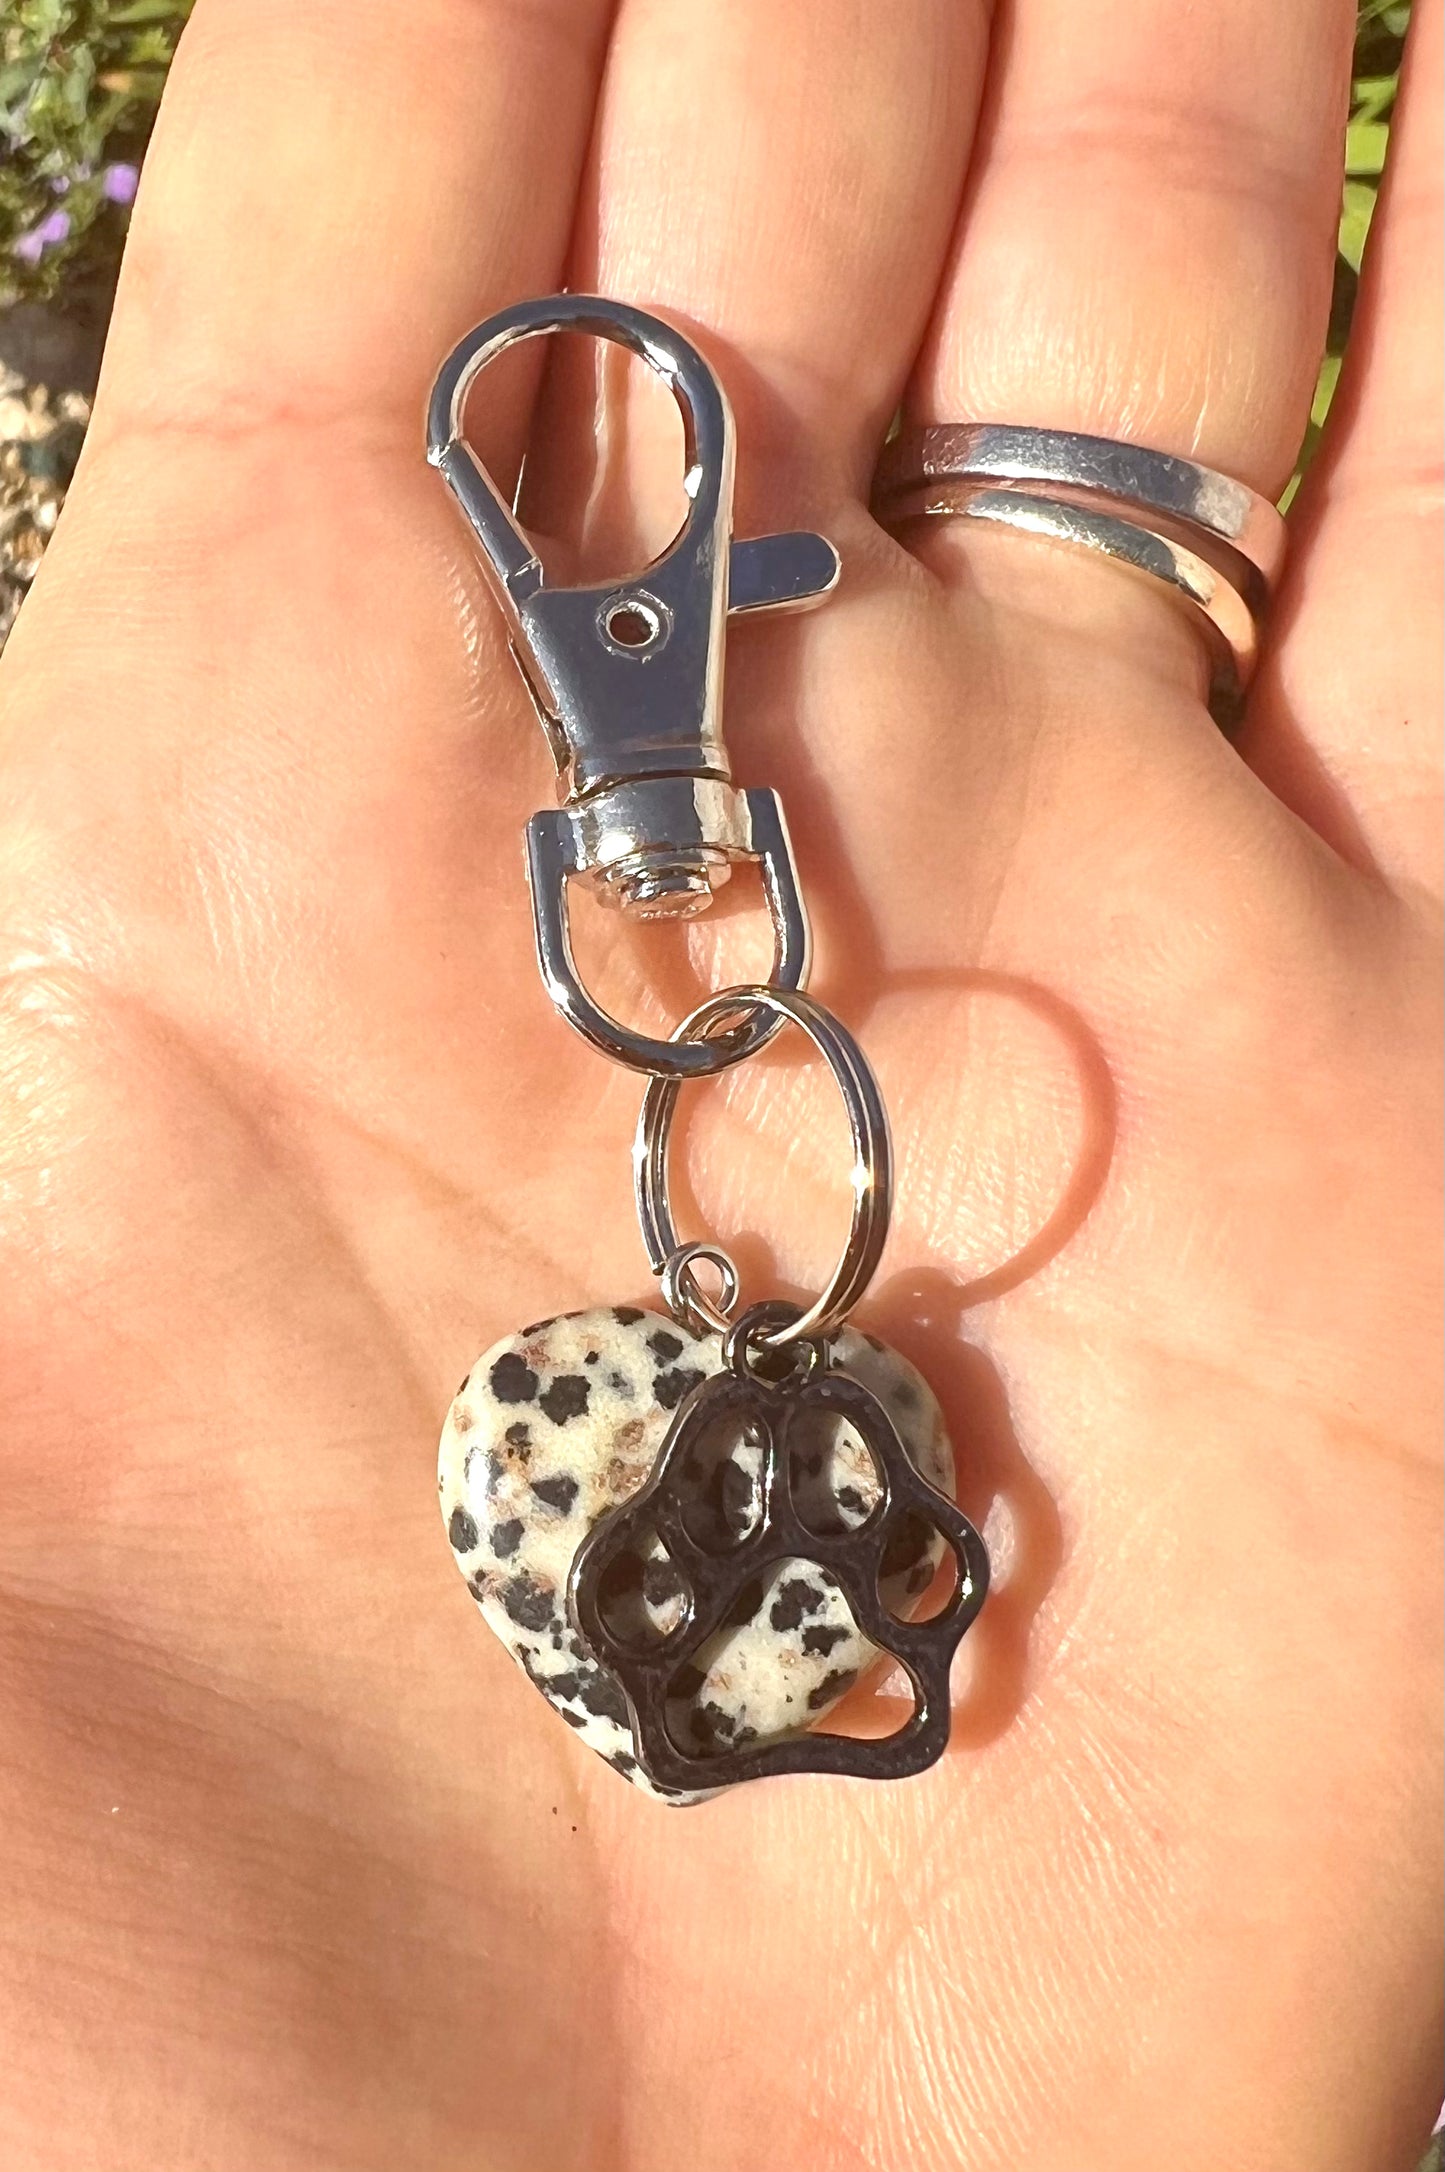 Dalmatian Jasper Crystal Healing Gemstone Collar Charms for Pets